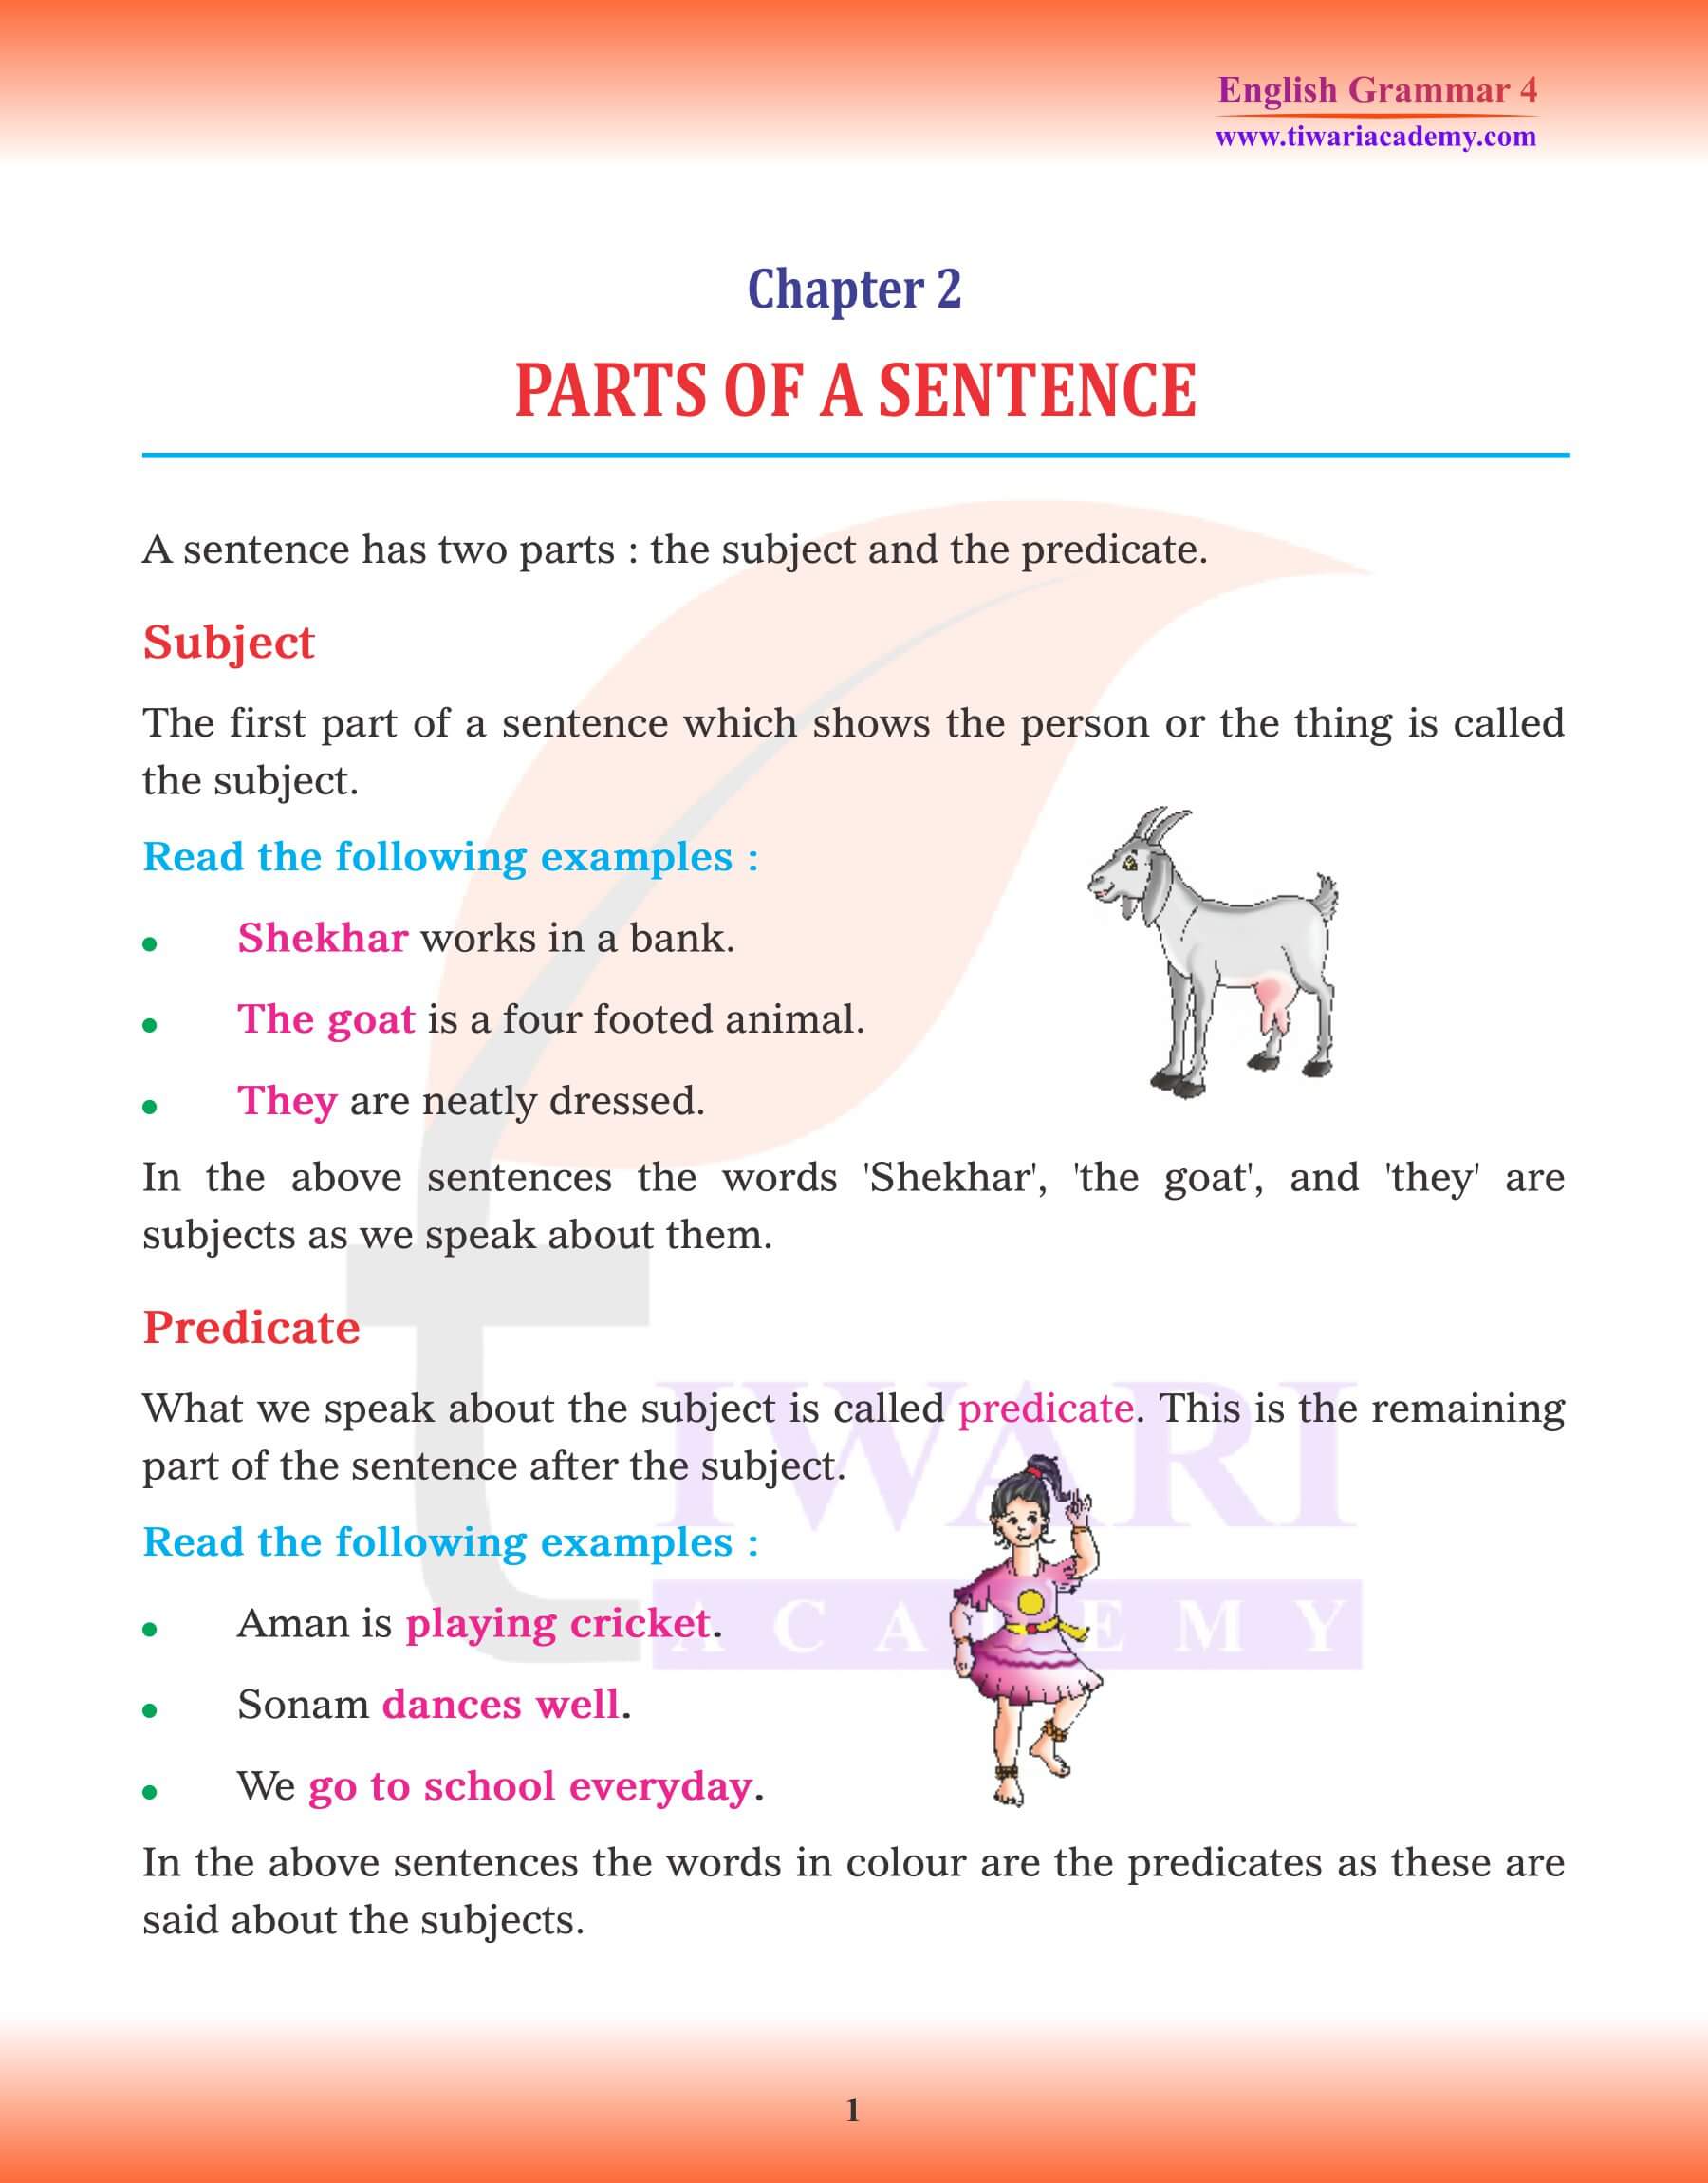 Class 4 English Grammar Chapter 2 Parts of a Sentence